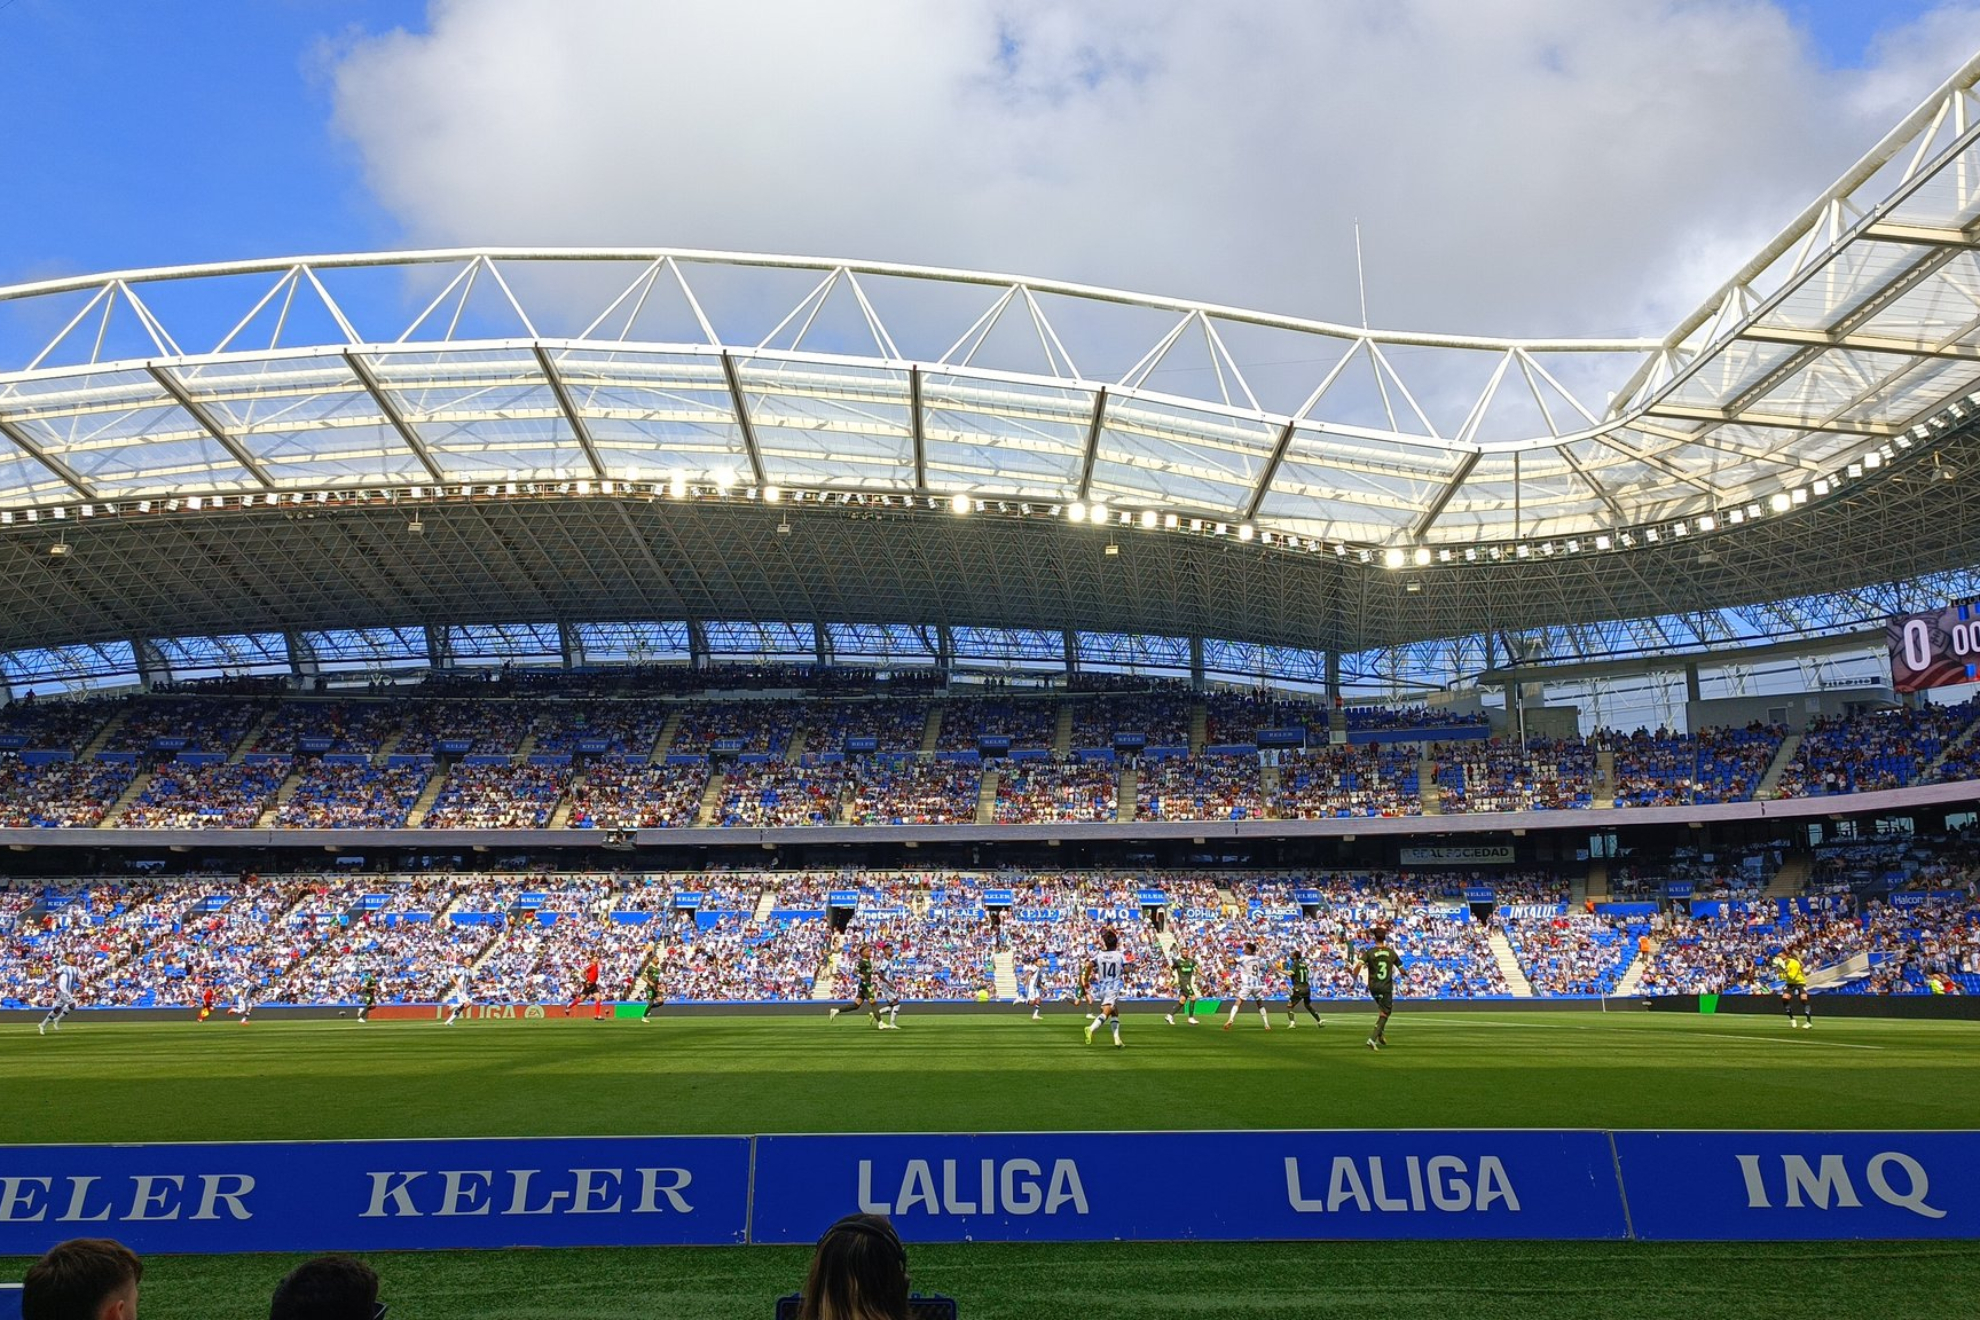 Fan Token holders return to LaLiga stadiums